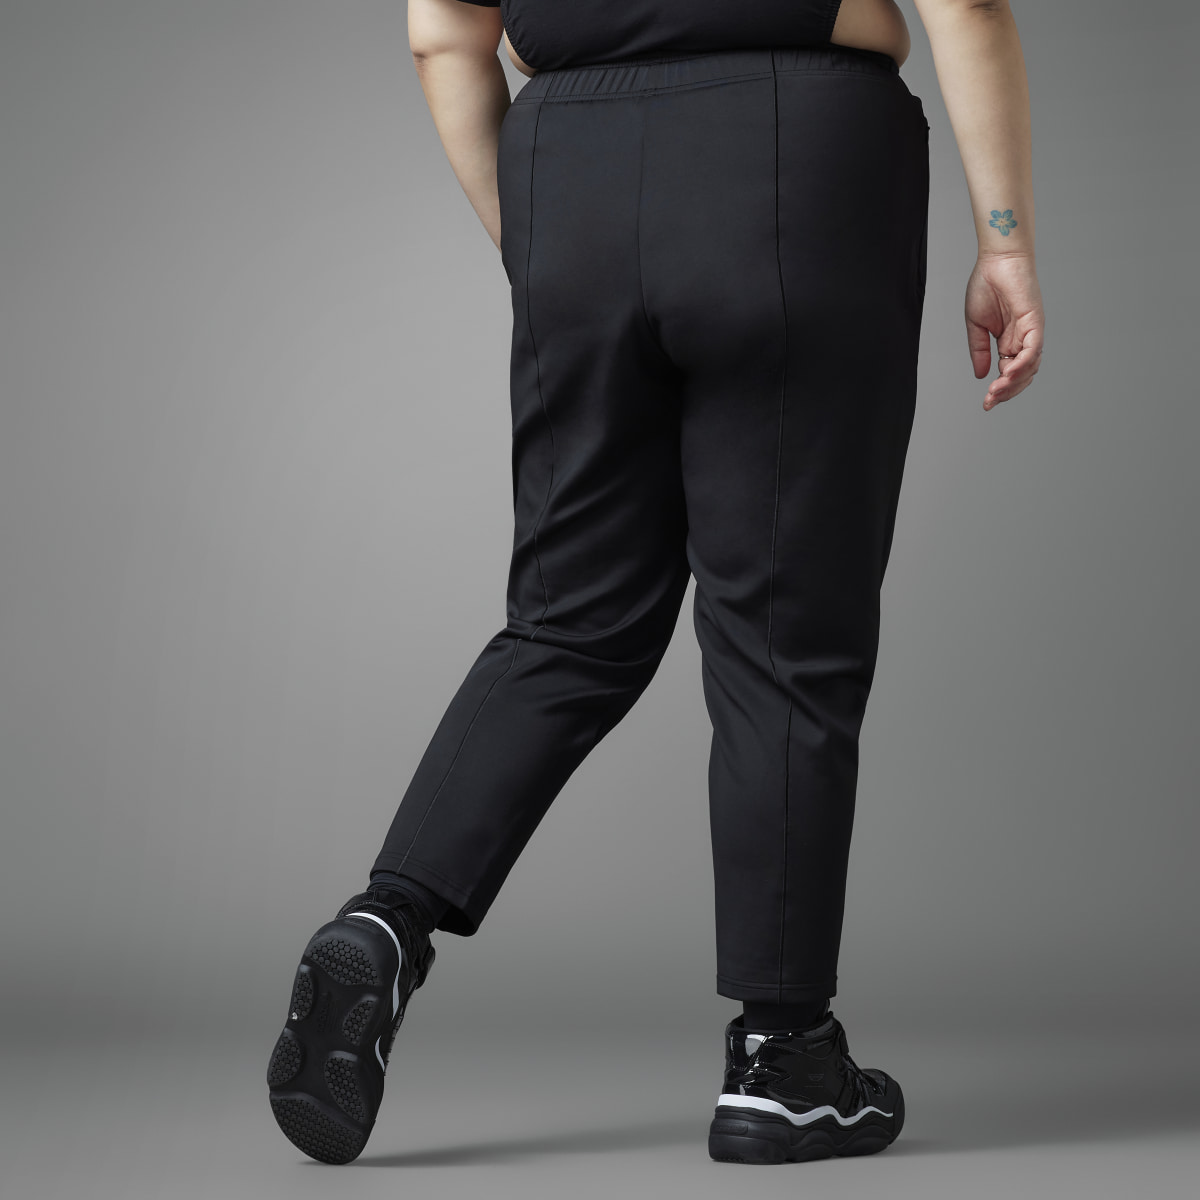 Adidas Ripstop Golf Pants - Black | Free Shipping Nationwide on O